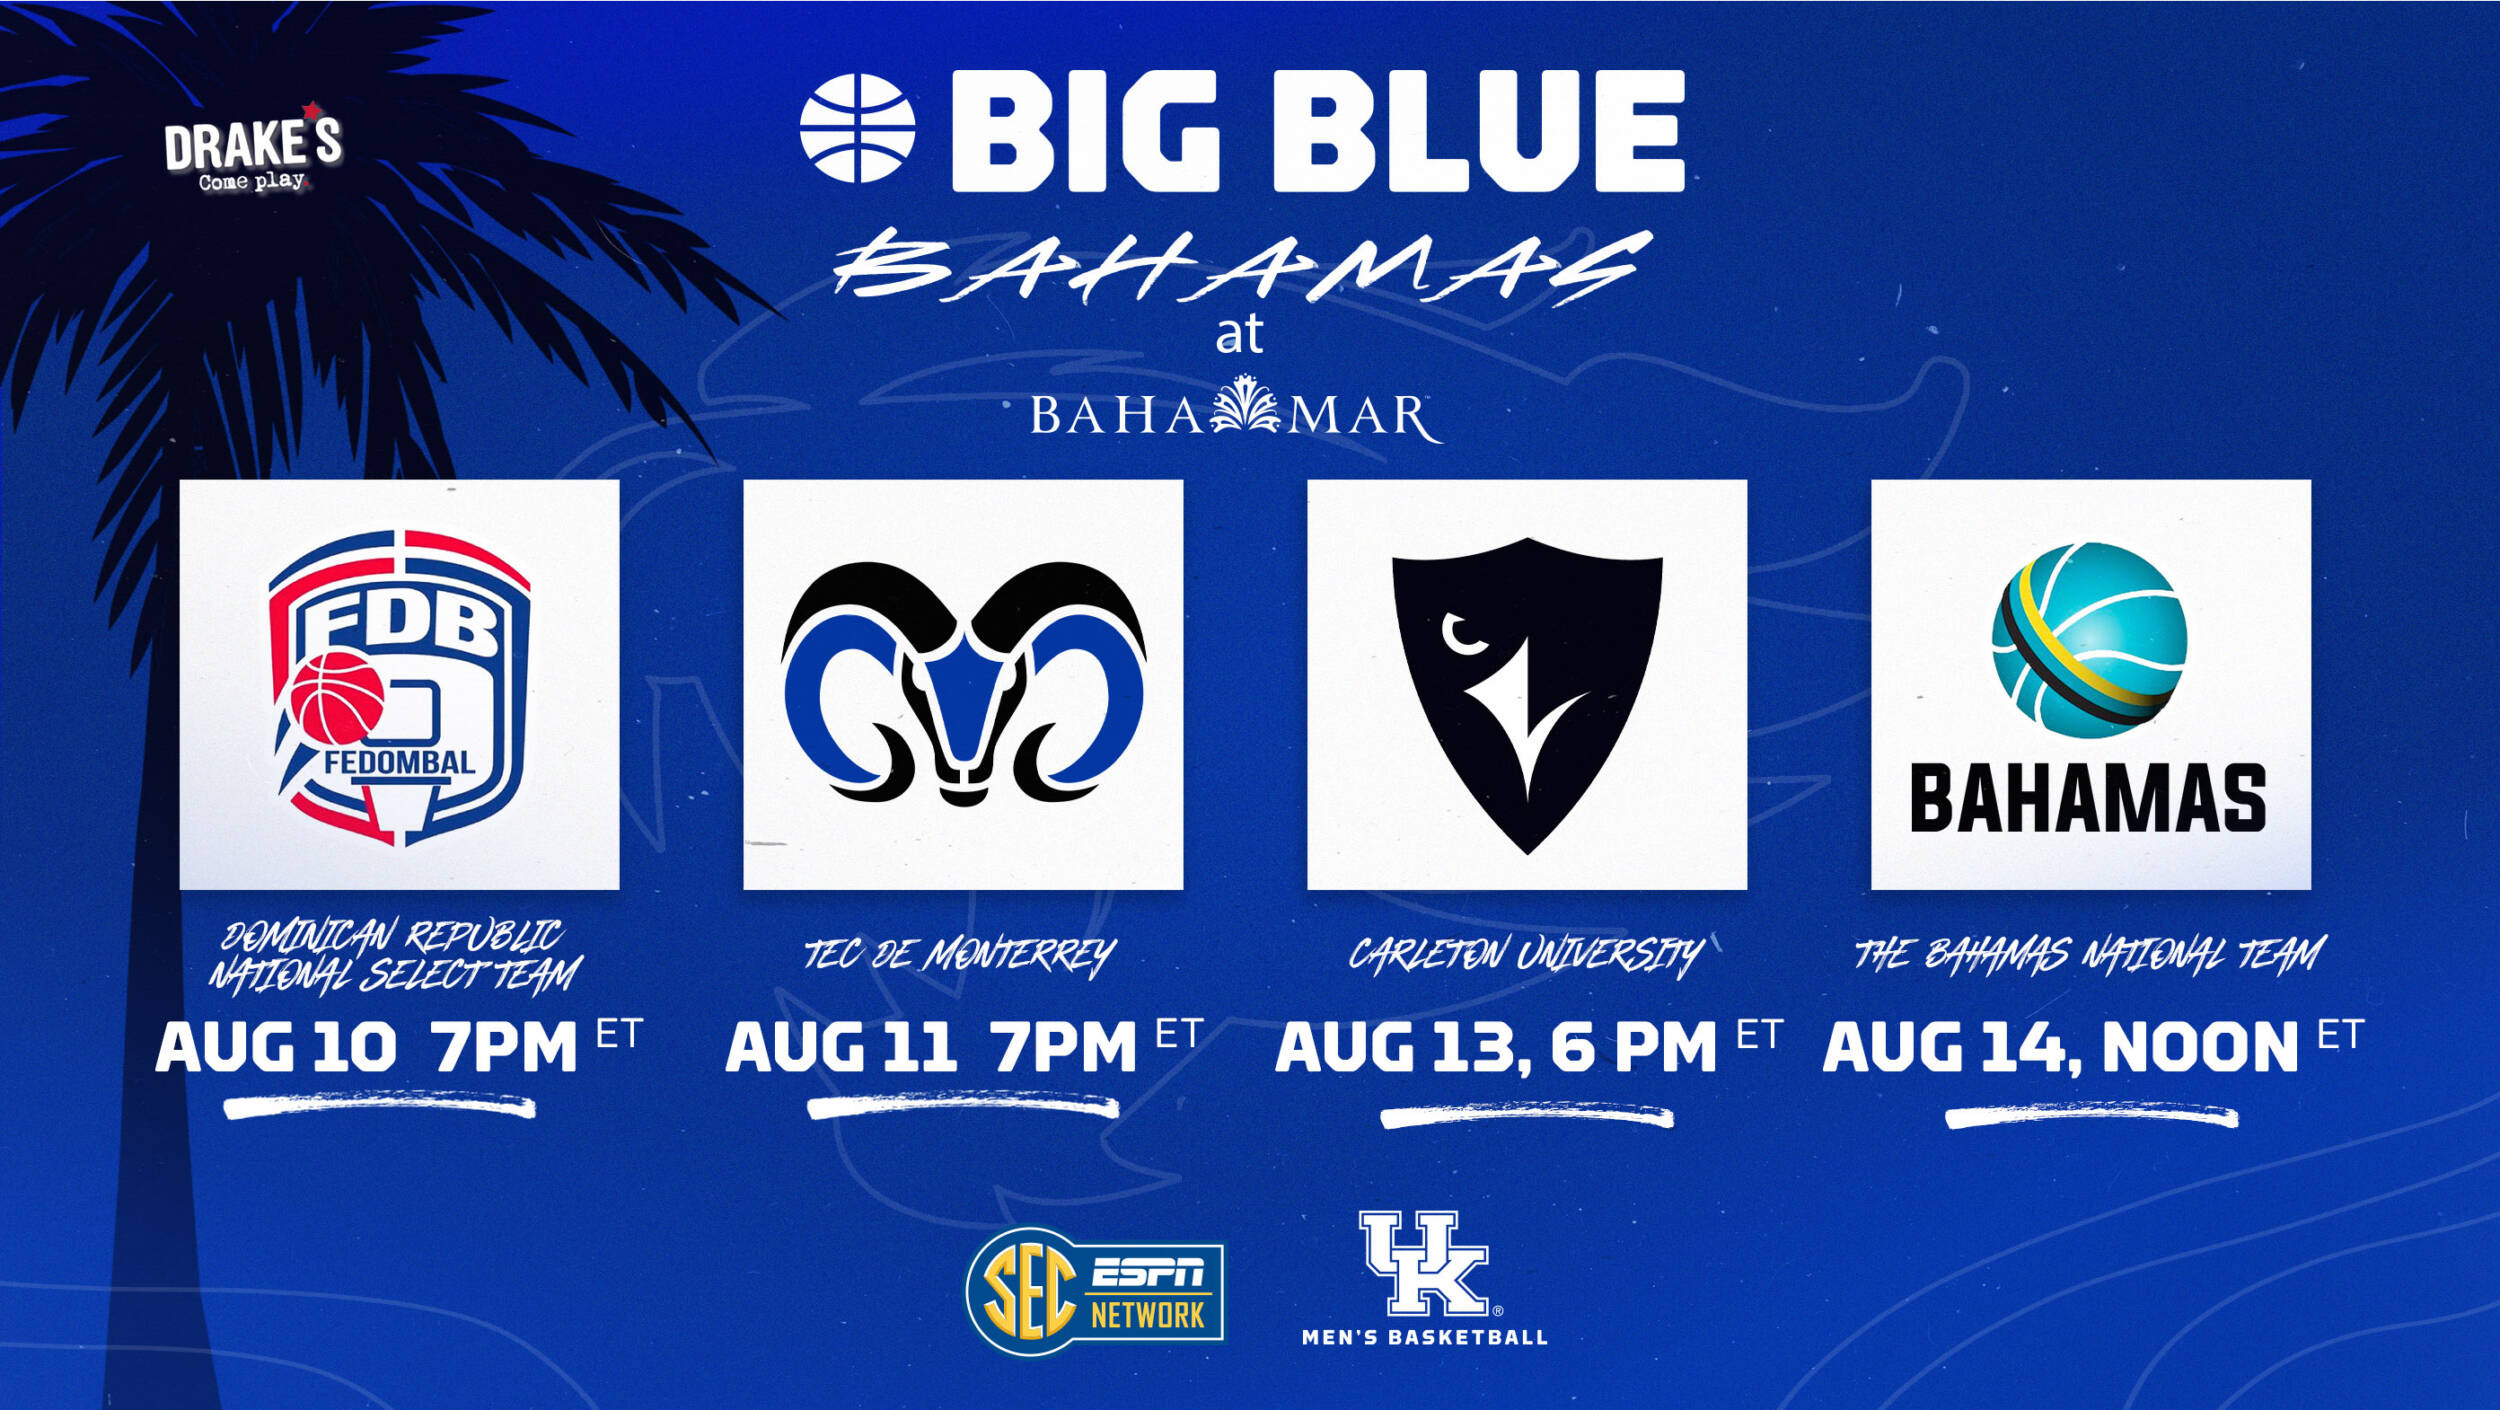 Kentucky Men's Basketball on X: New Kentucky #BigBlueBahamas